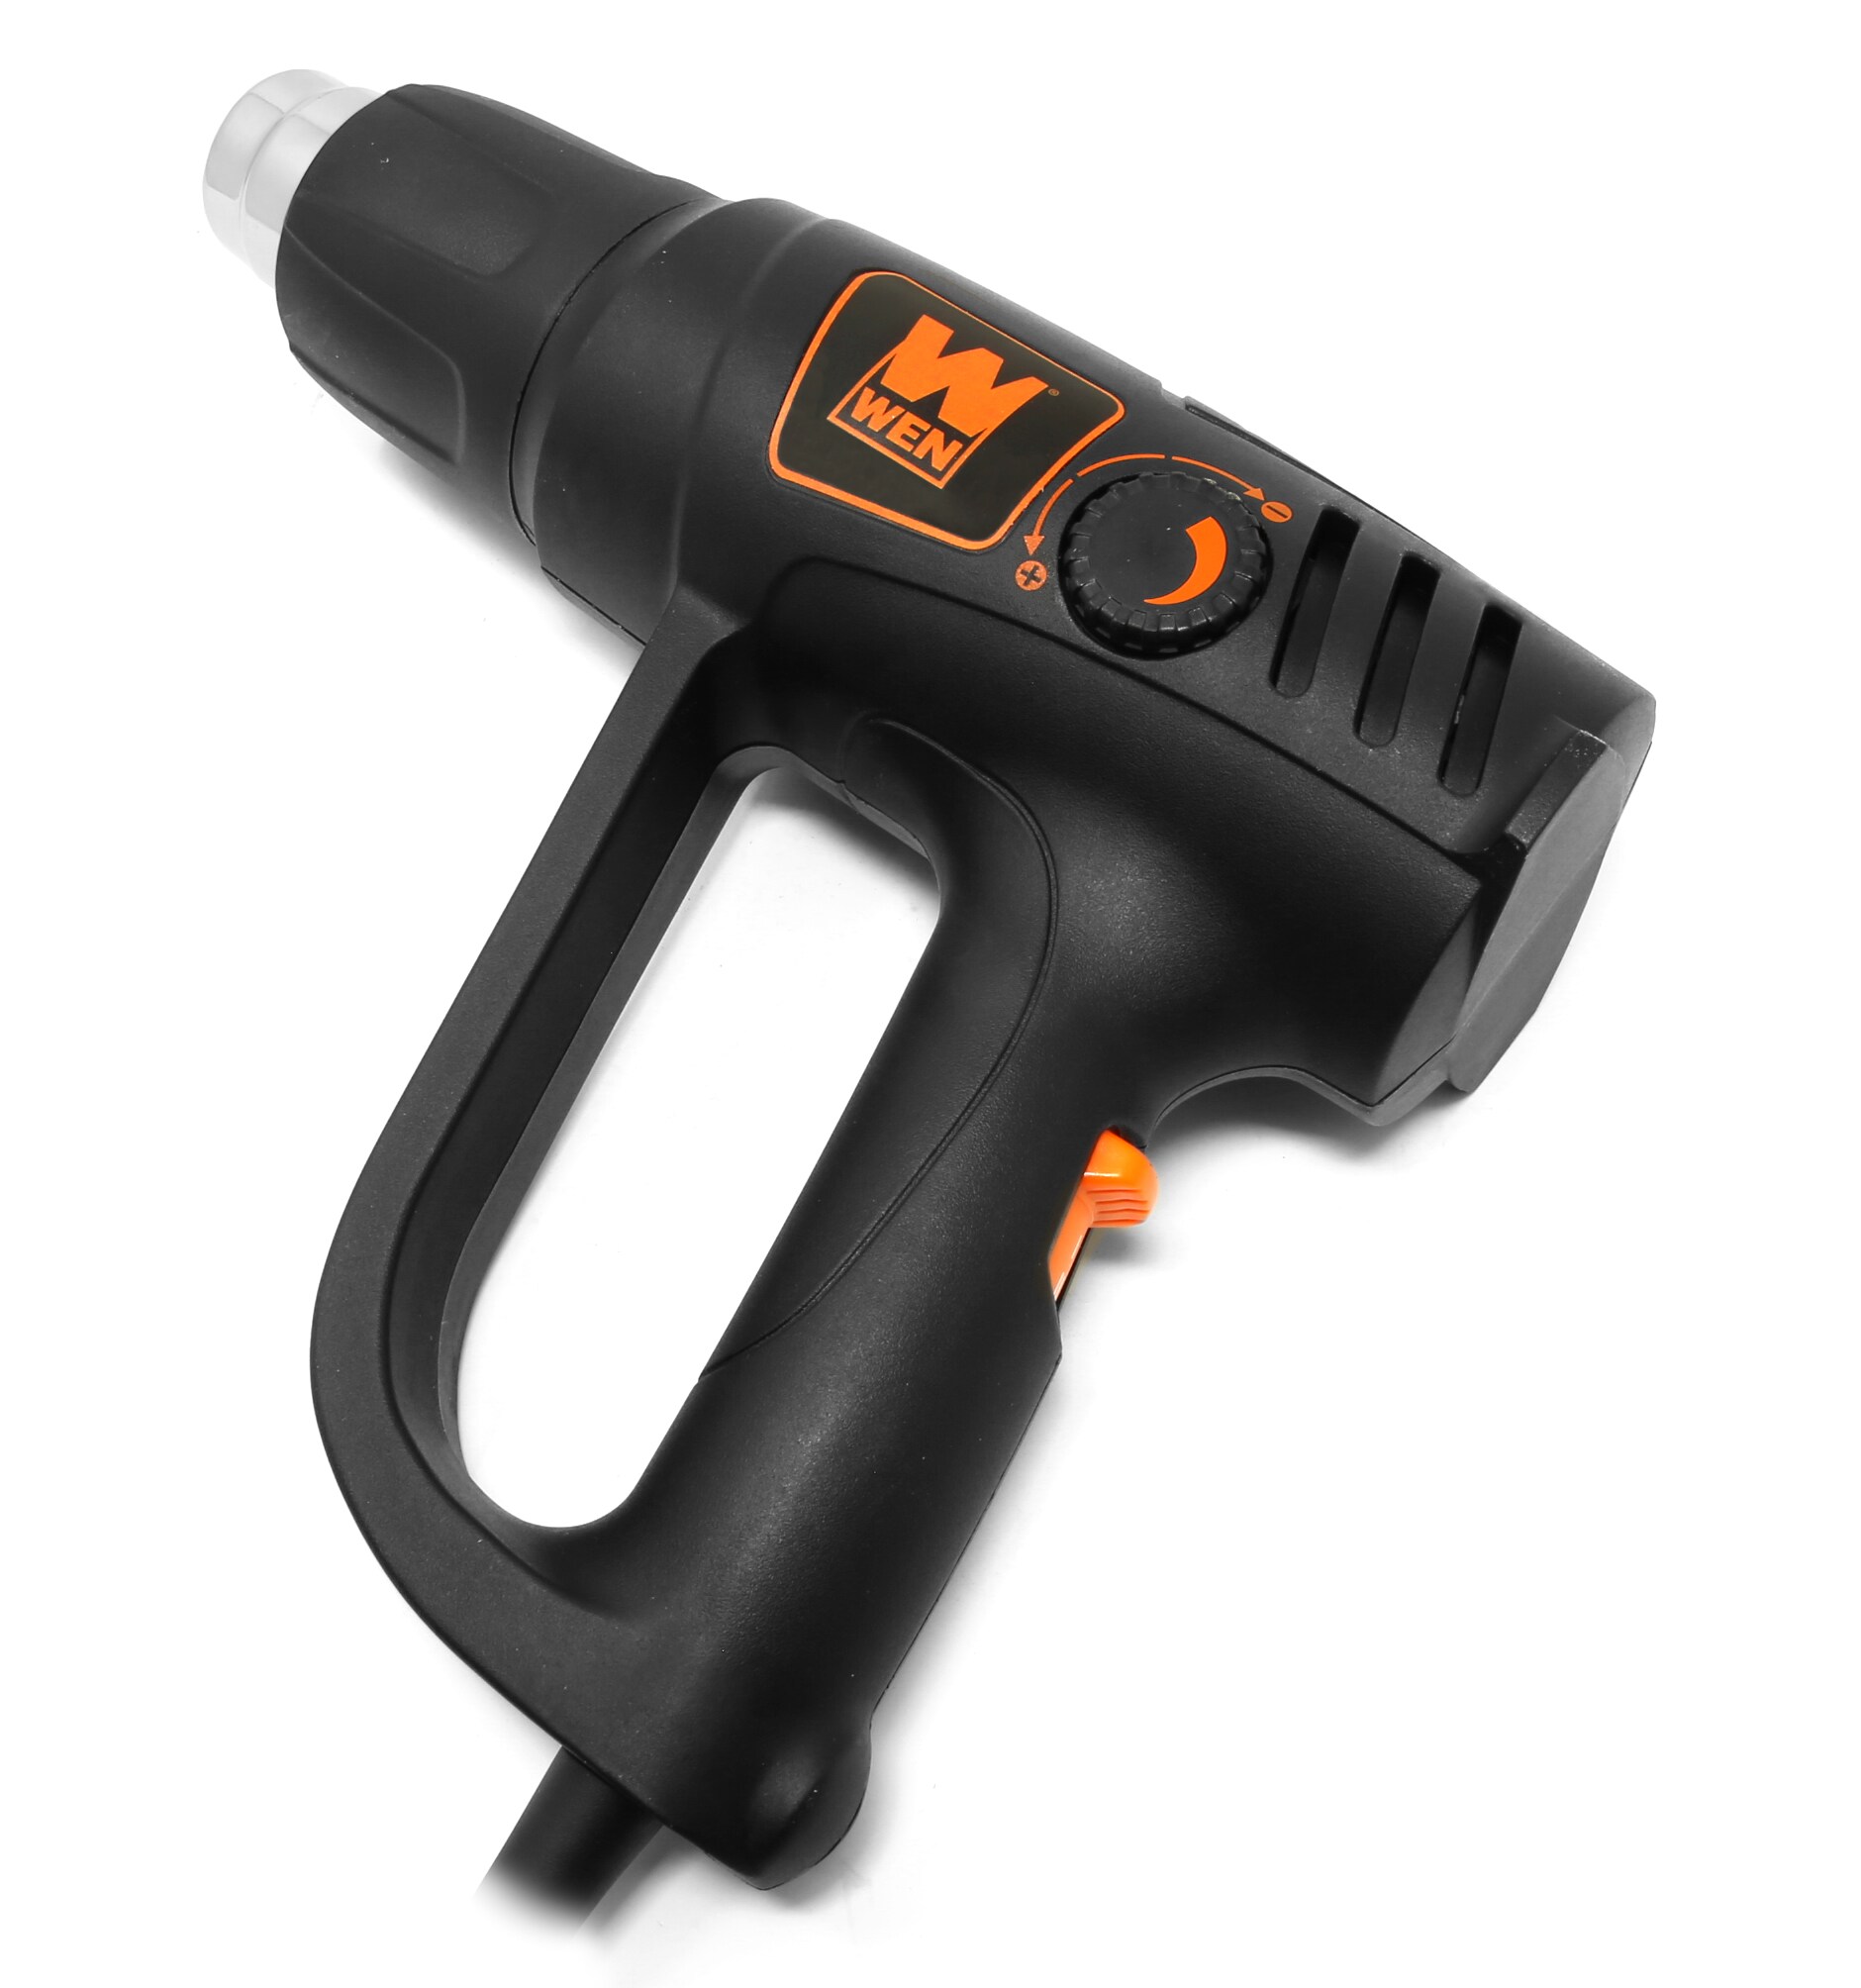 Heat Gun 1750W Black & Decker – Online Electrical